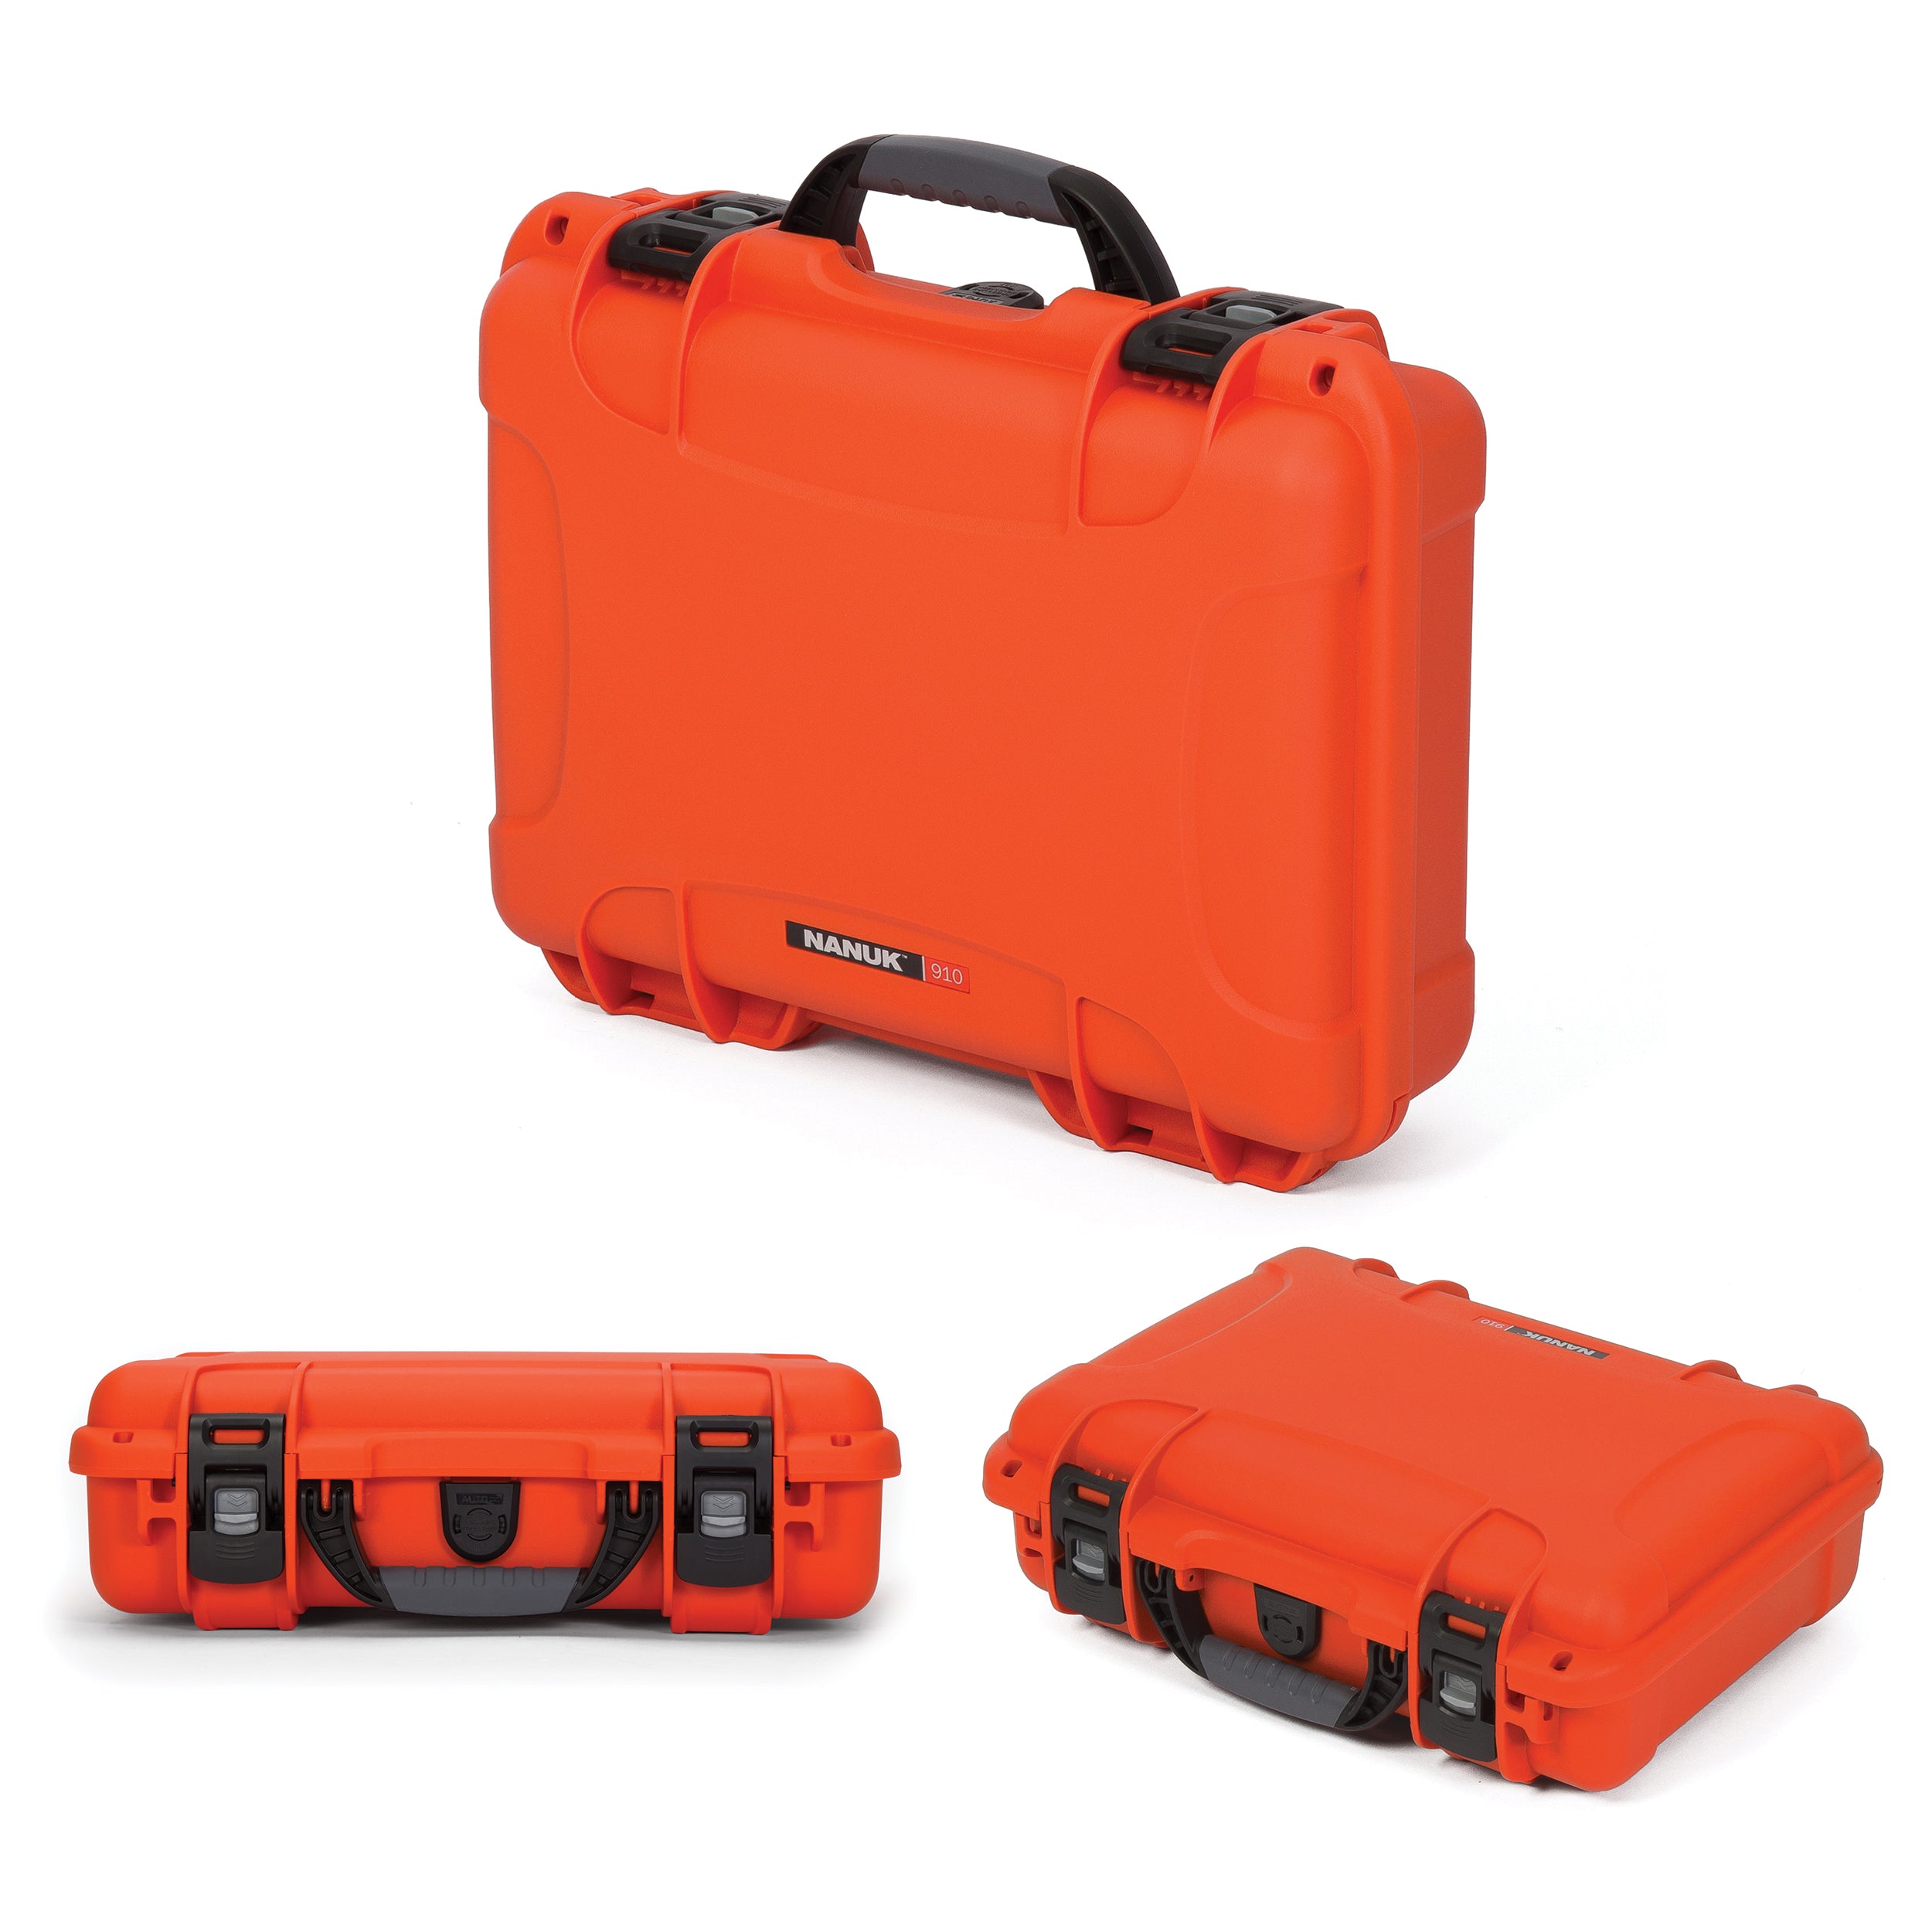 nanuk 909 waterproof hard case with custom insert for dji mavic mini orange